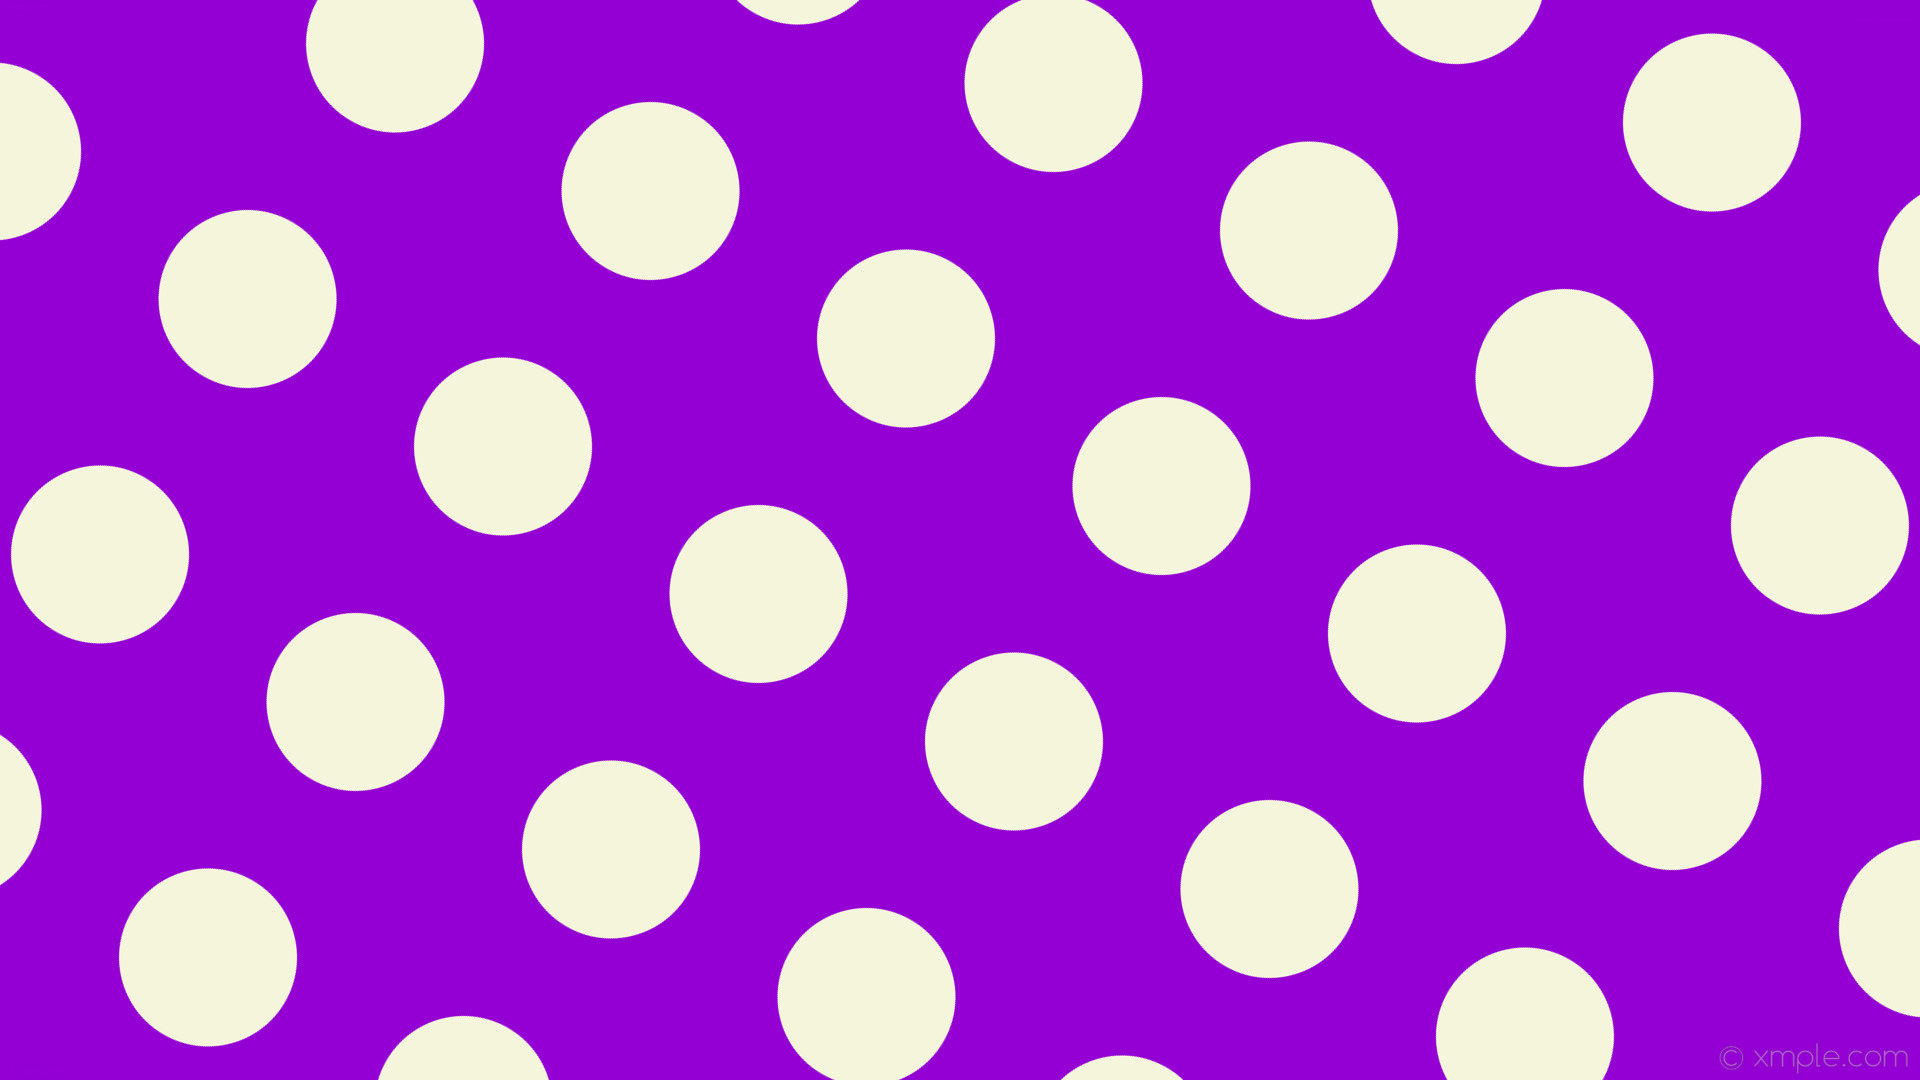 1920x1080 Purple And White Polka Dot Wallpaper